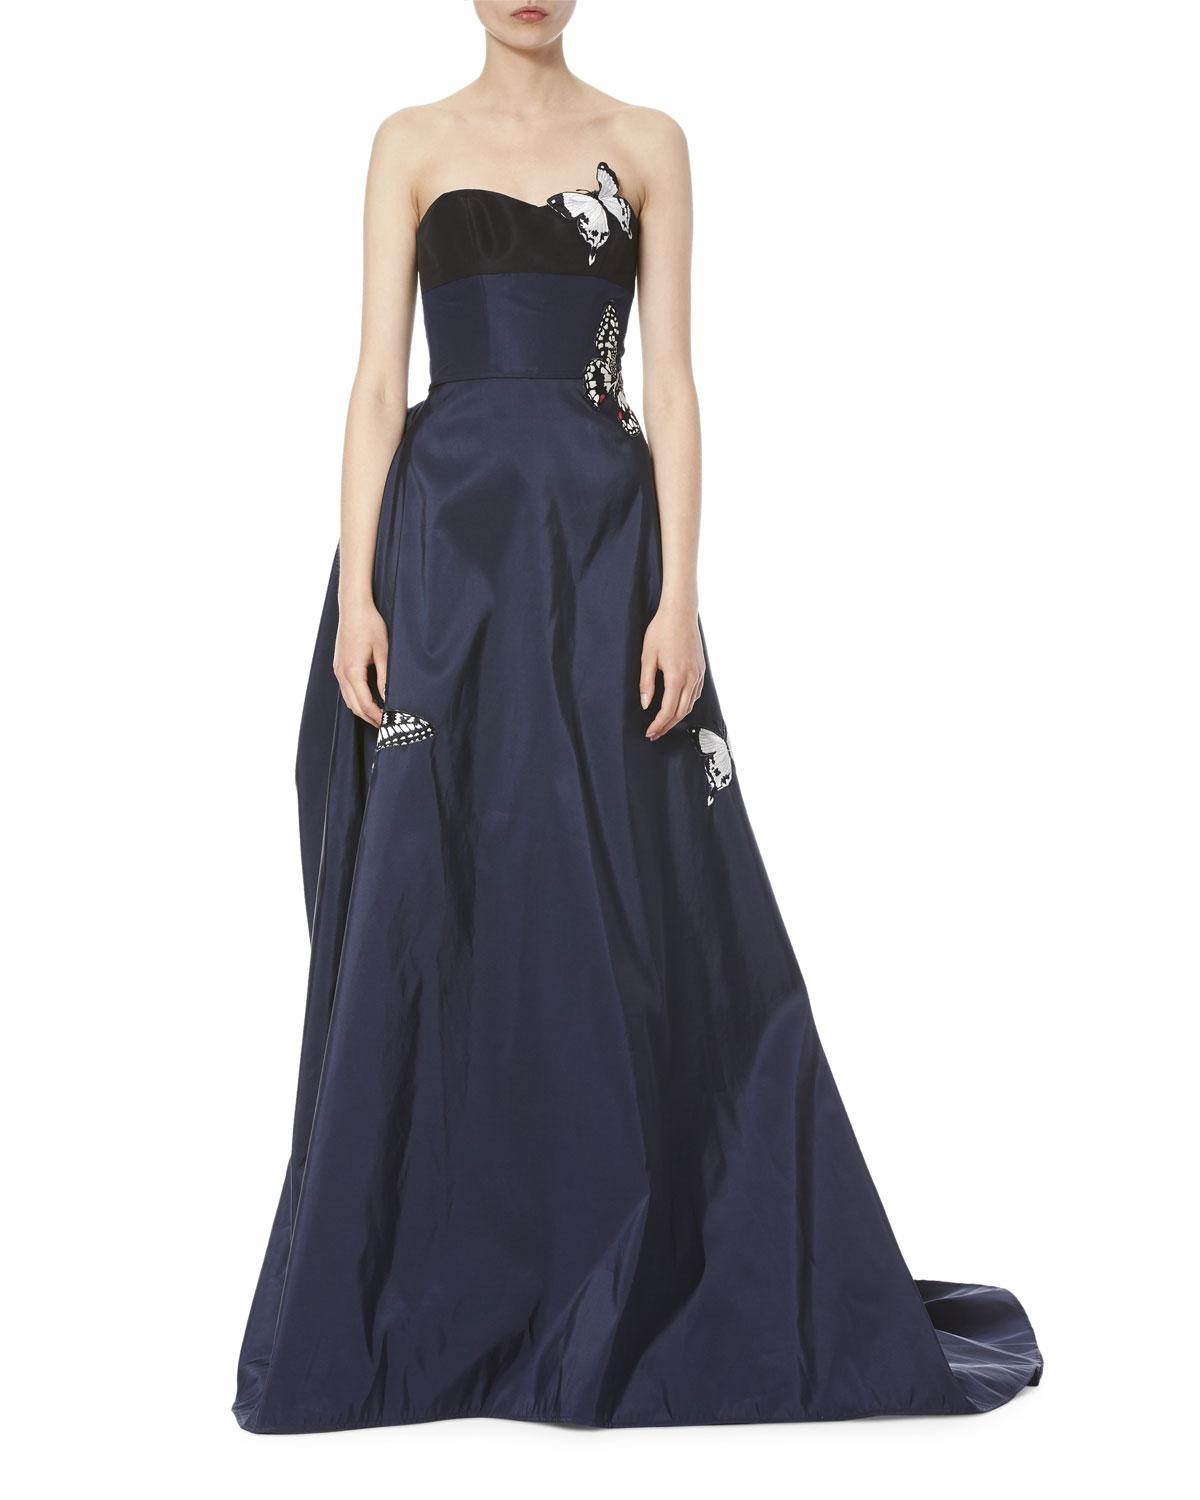 Carolina herrera gown, Strapless evening gowns, Strapless evening dress